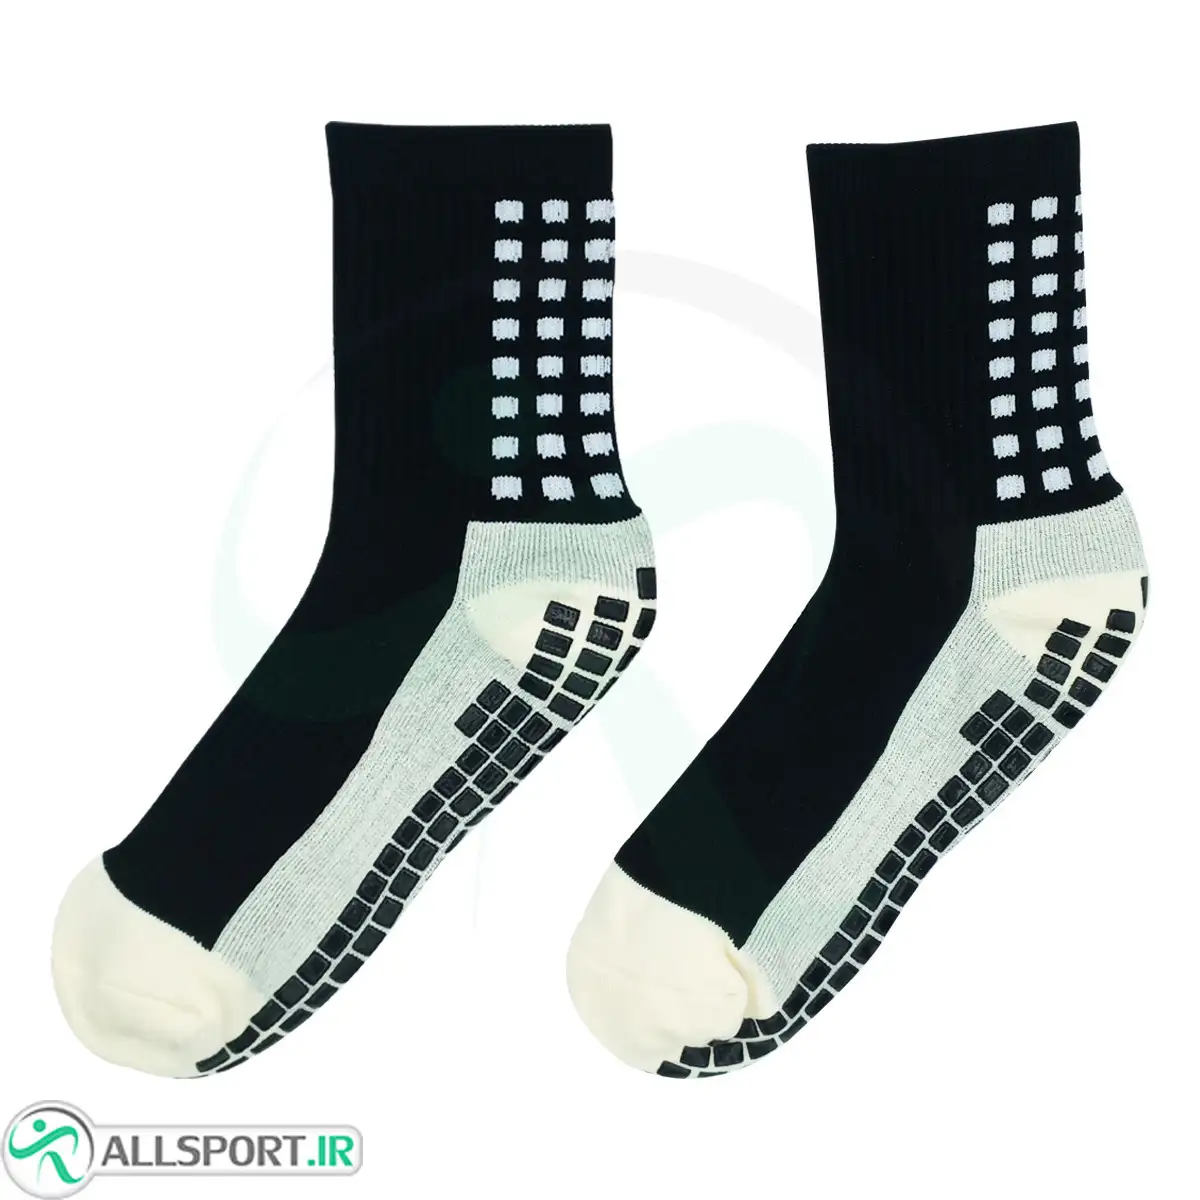 جوراب استپ دار ساق کوتاه فاکس Rx-Fox Socks Black White 12154596